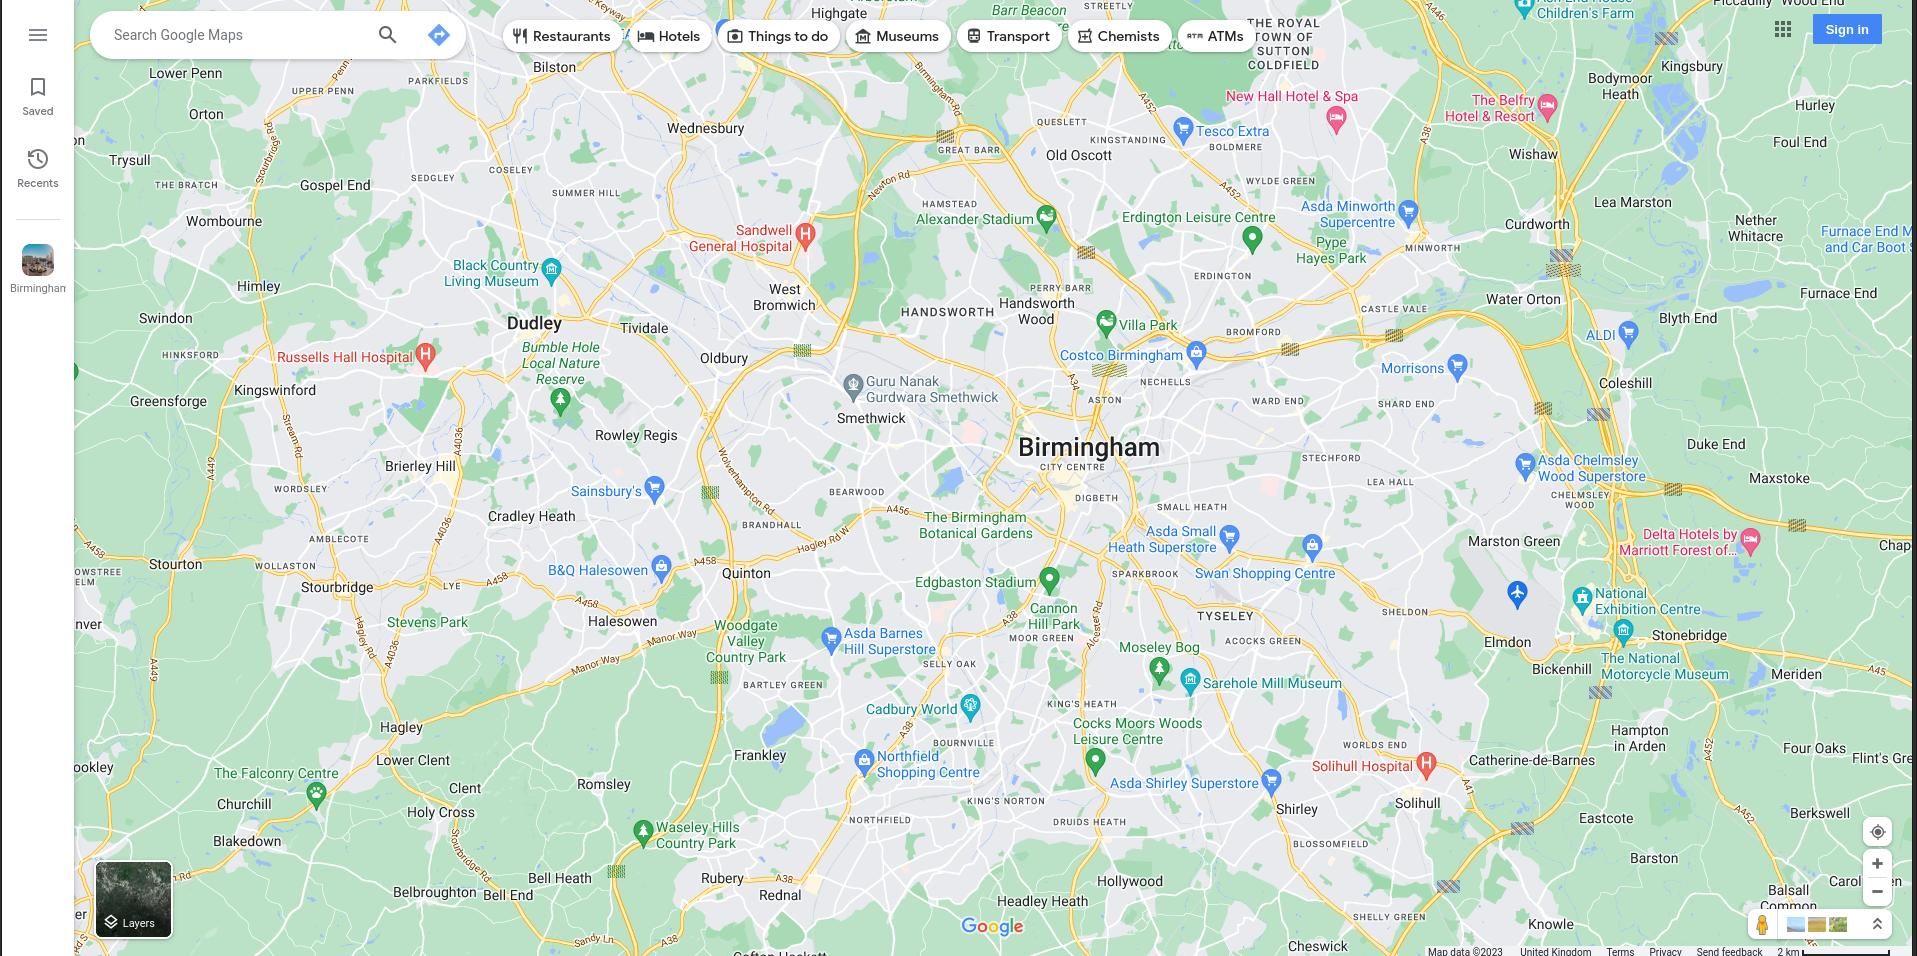 Google Maps View Of Birmingham 